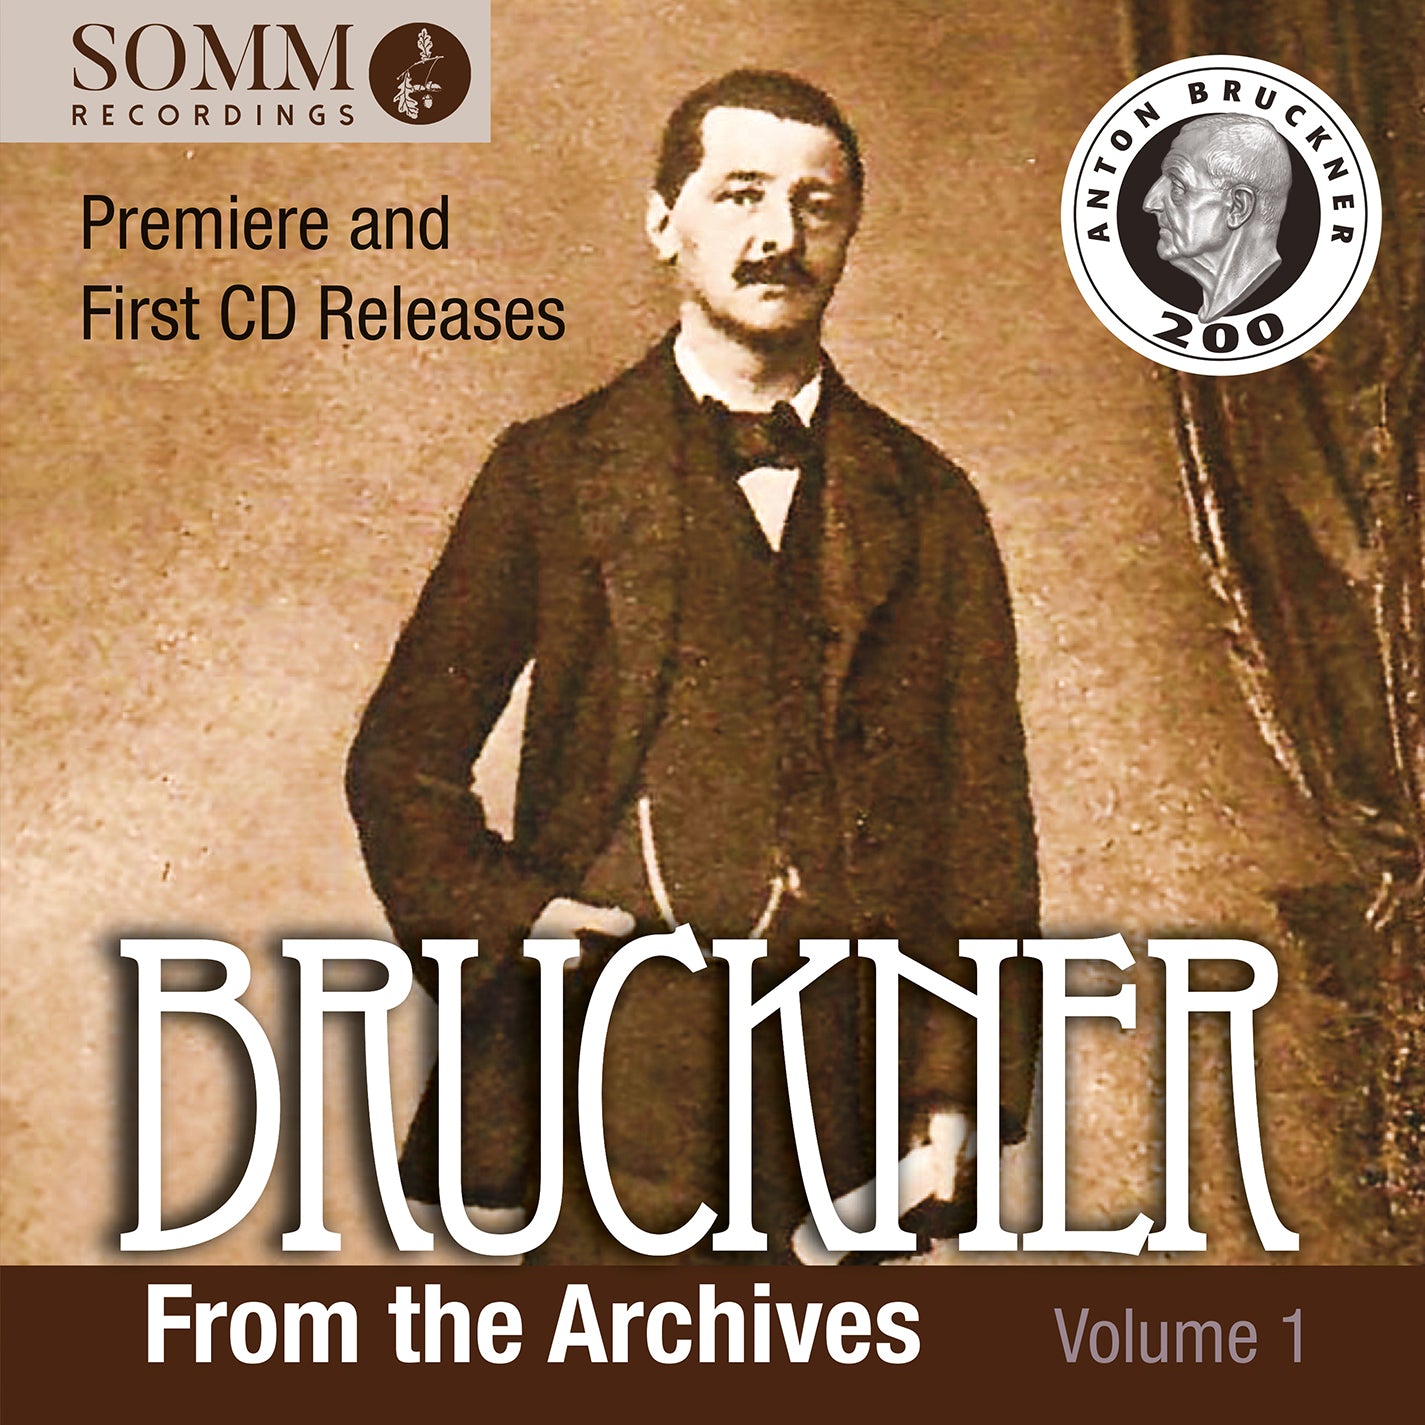 Bruckner from the Archives, Vol. 1: Symphonies nos. 00 & 1, etc.